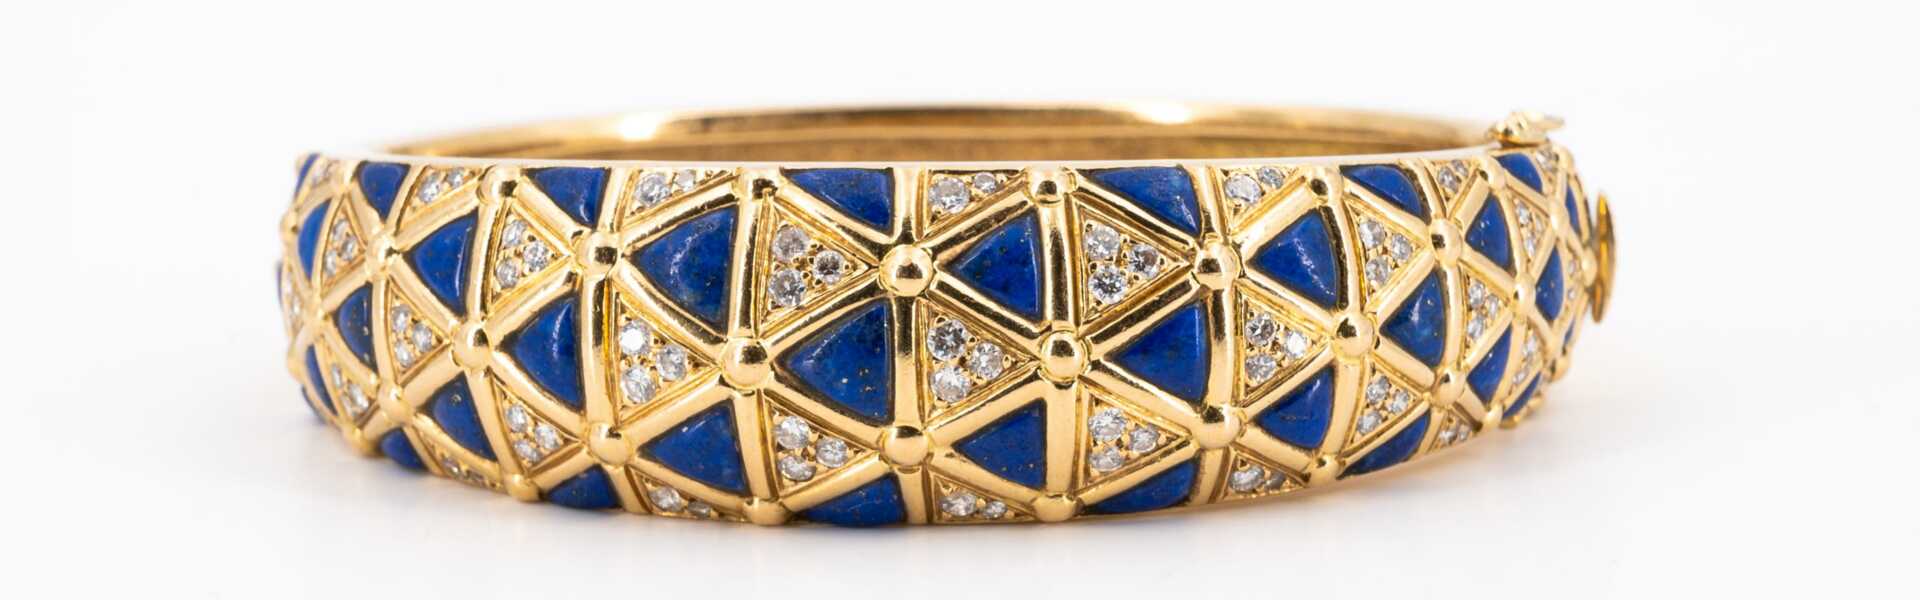 Van Cleef & Arpels. Crowned-Lapis-Lazuli-Diamond-Bangle